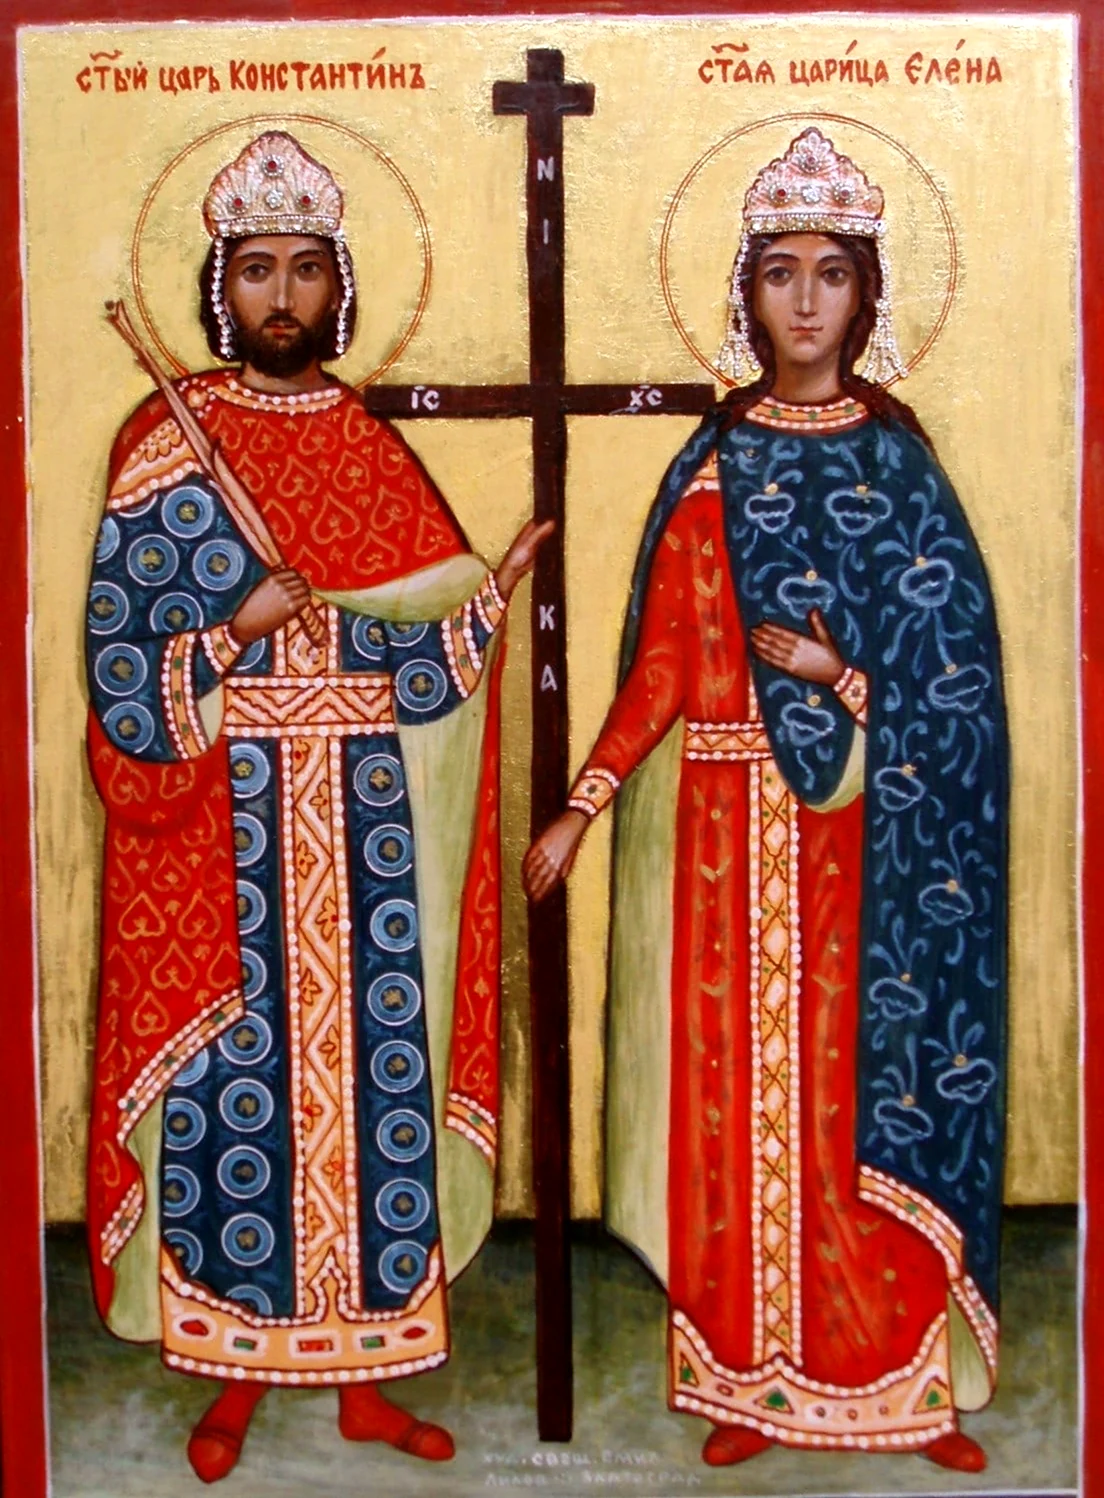 Святые царь Константин и царица Елена. Поздравление